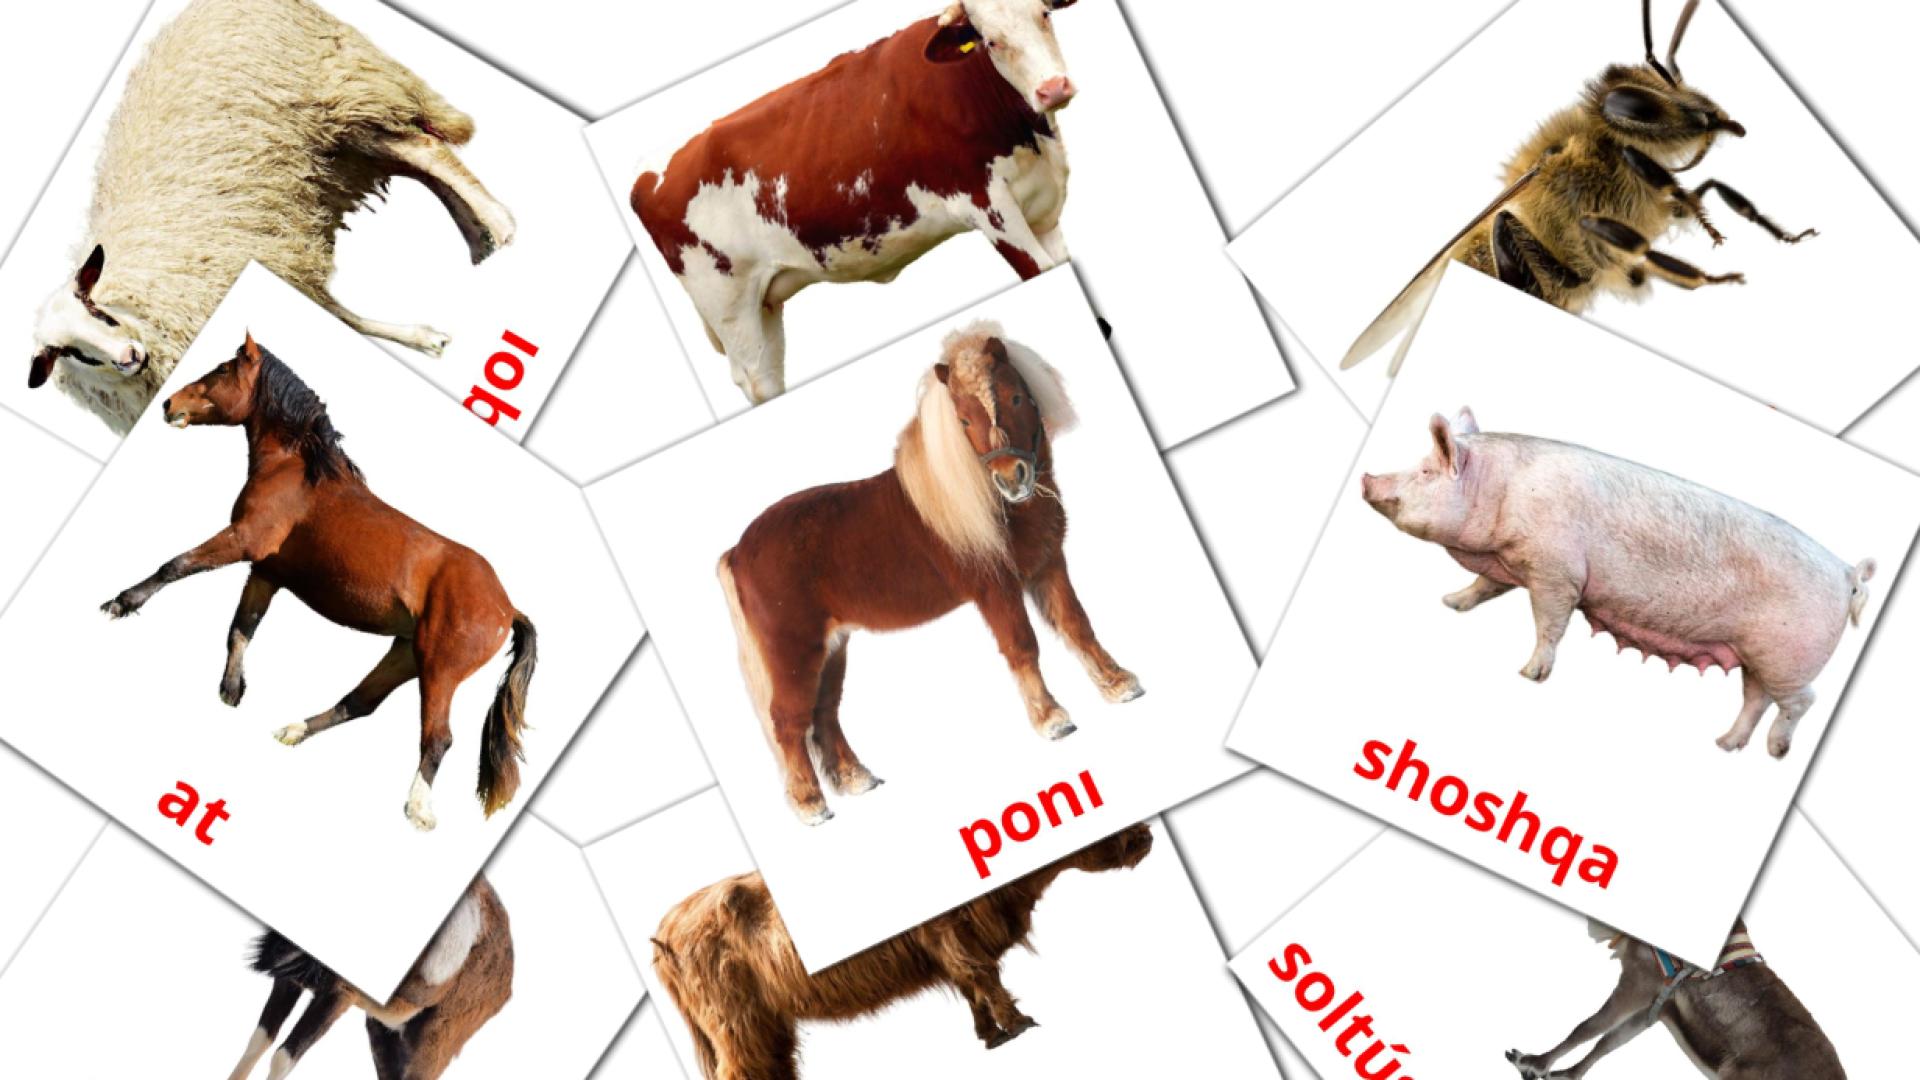 Farm animals - azerbaijani vocabulary cards